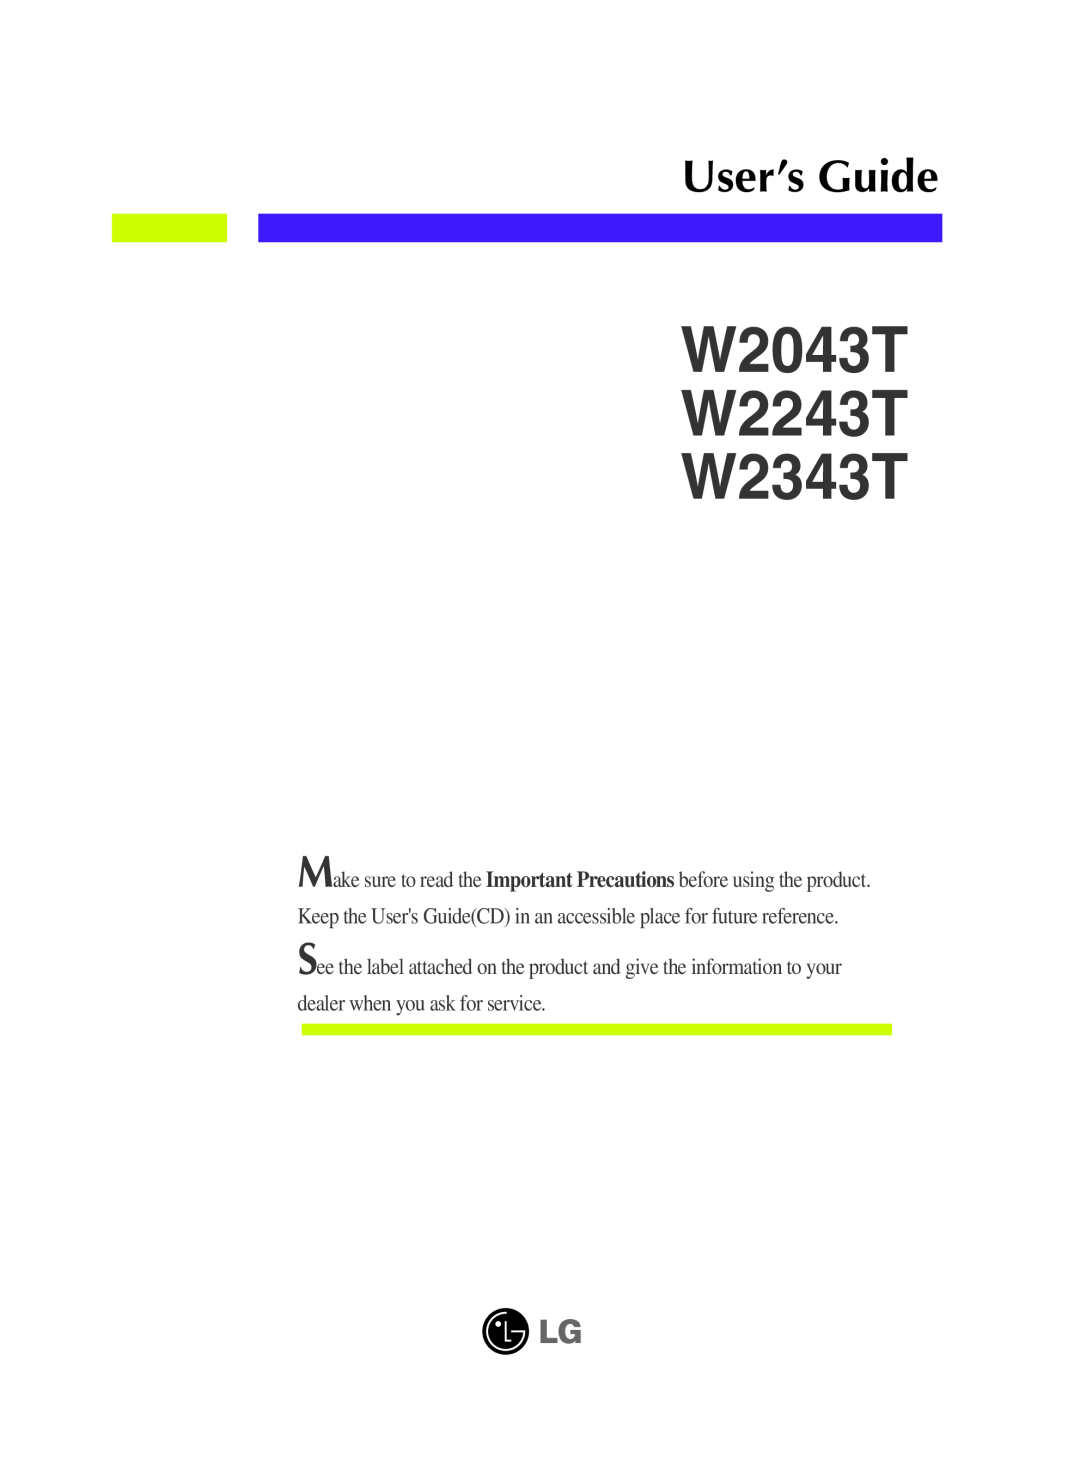 LG Electronics manual W2043T W2243T W2343T, User’s Guide 